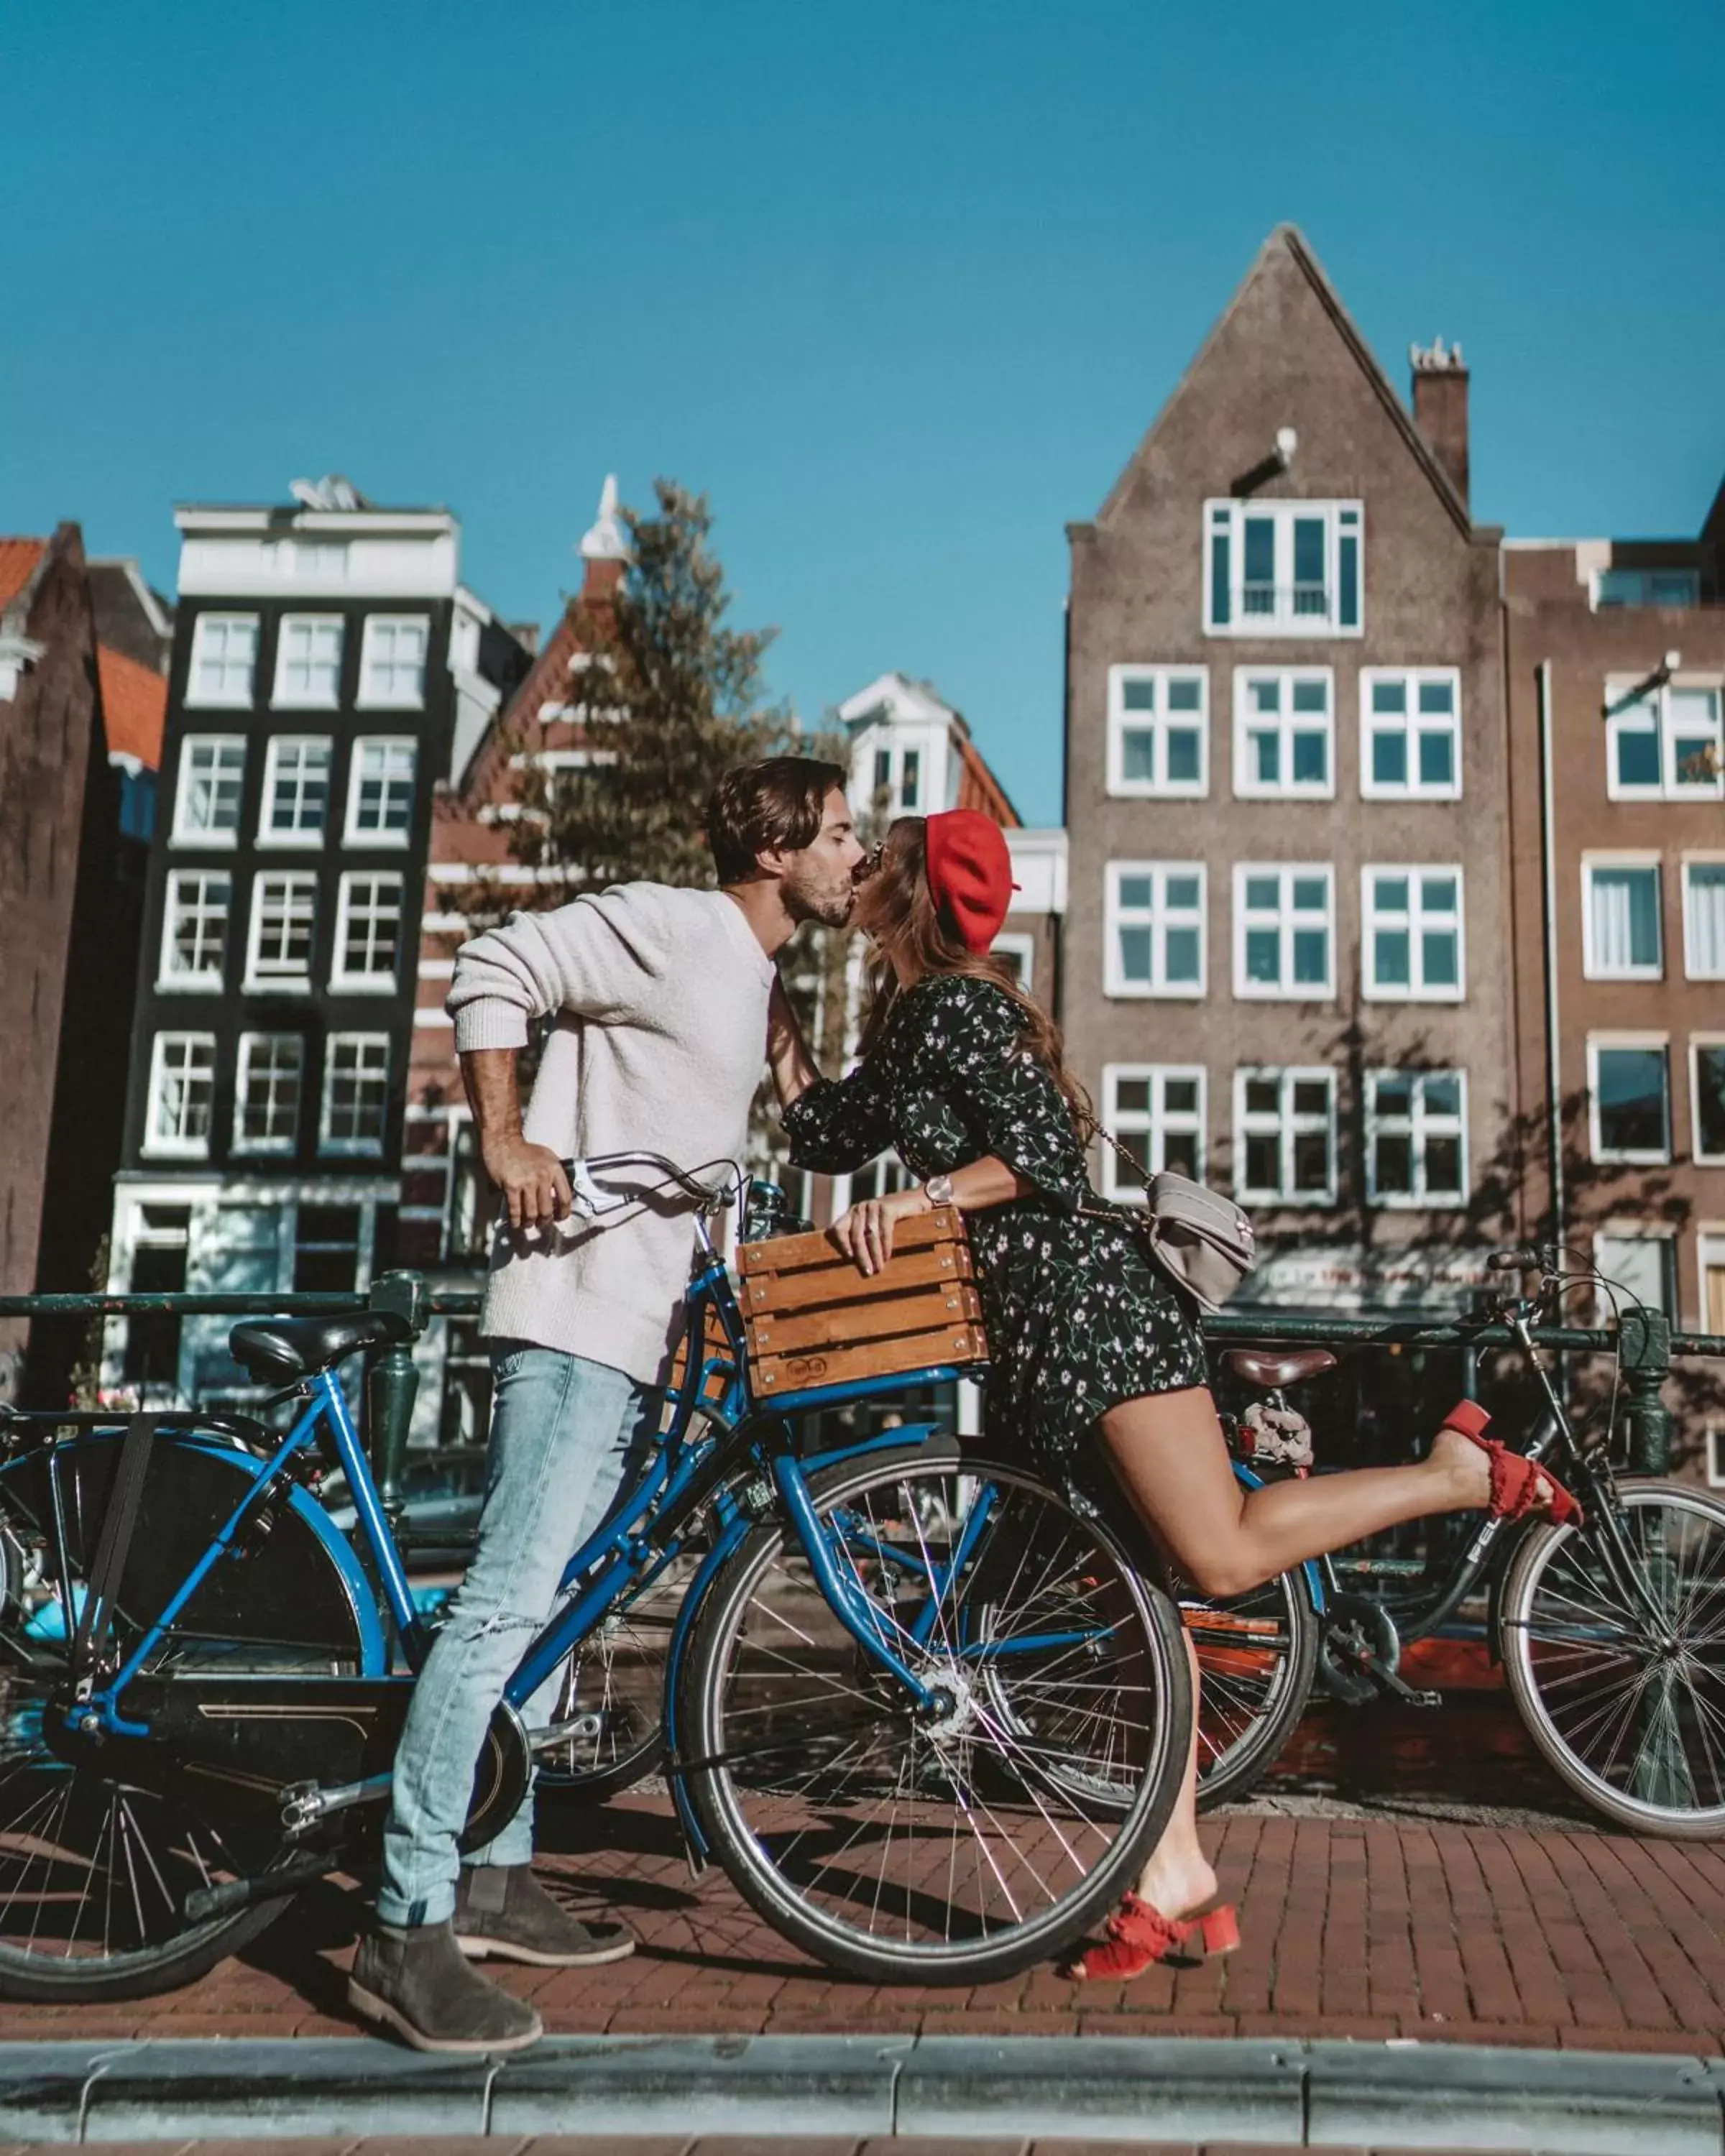 On site, Biking in Andaz Amsterdam Prinsengracht - a concept by Hyatt